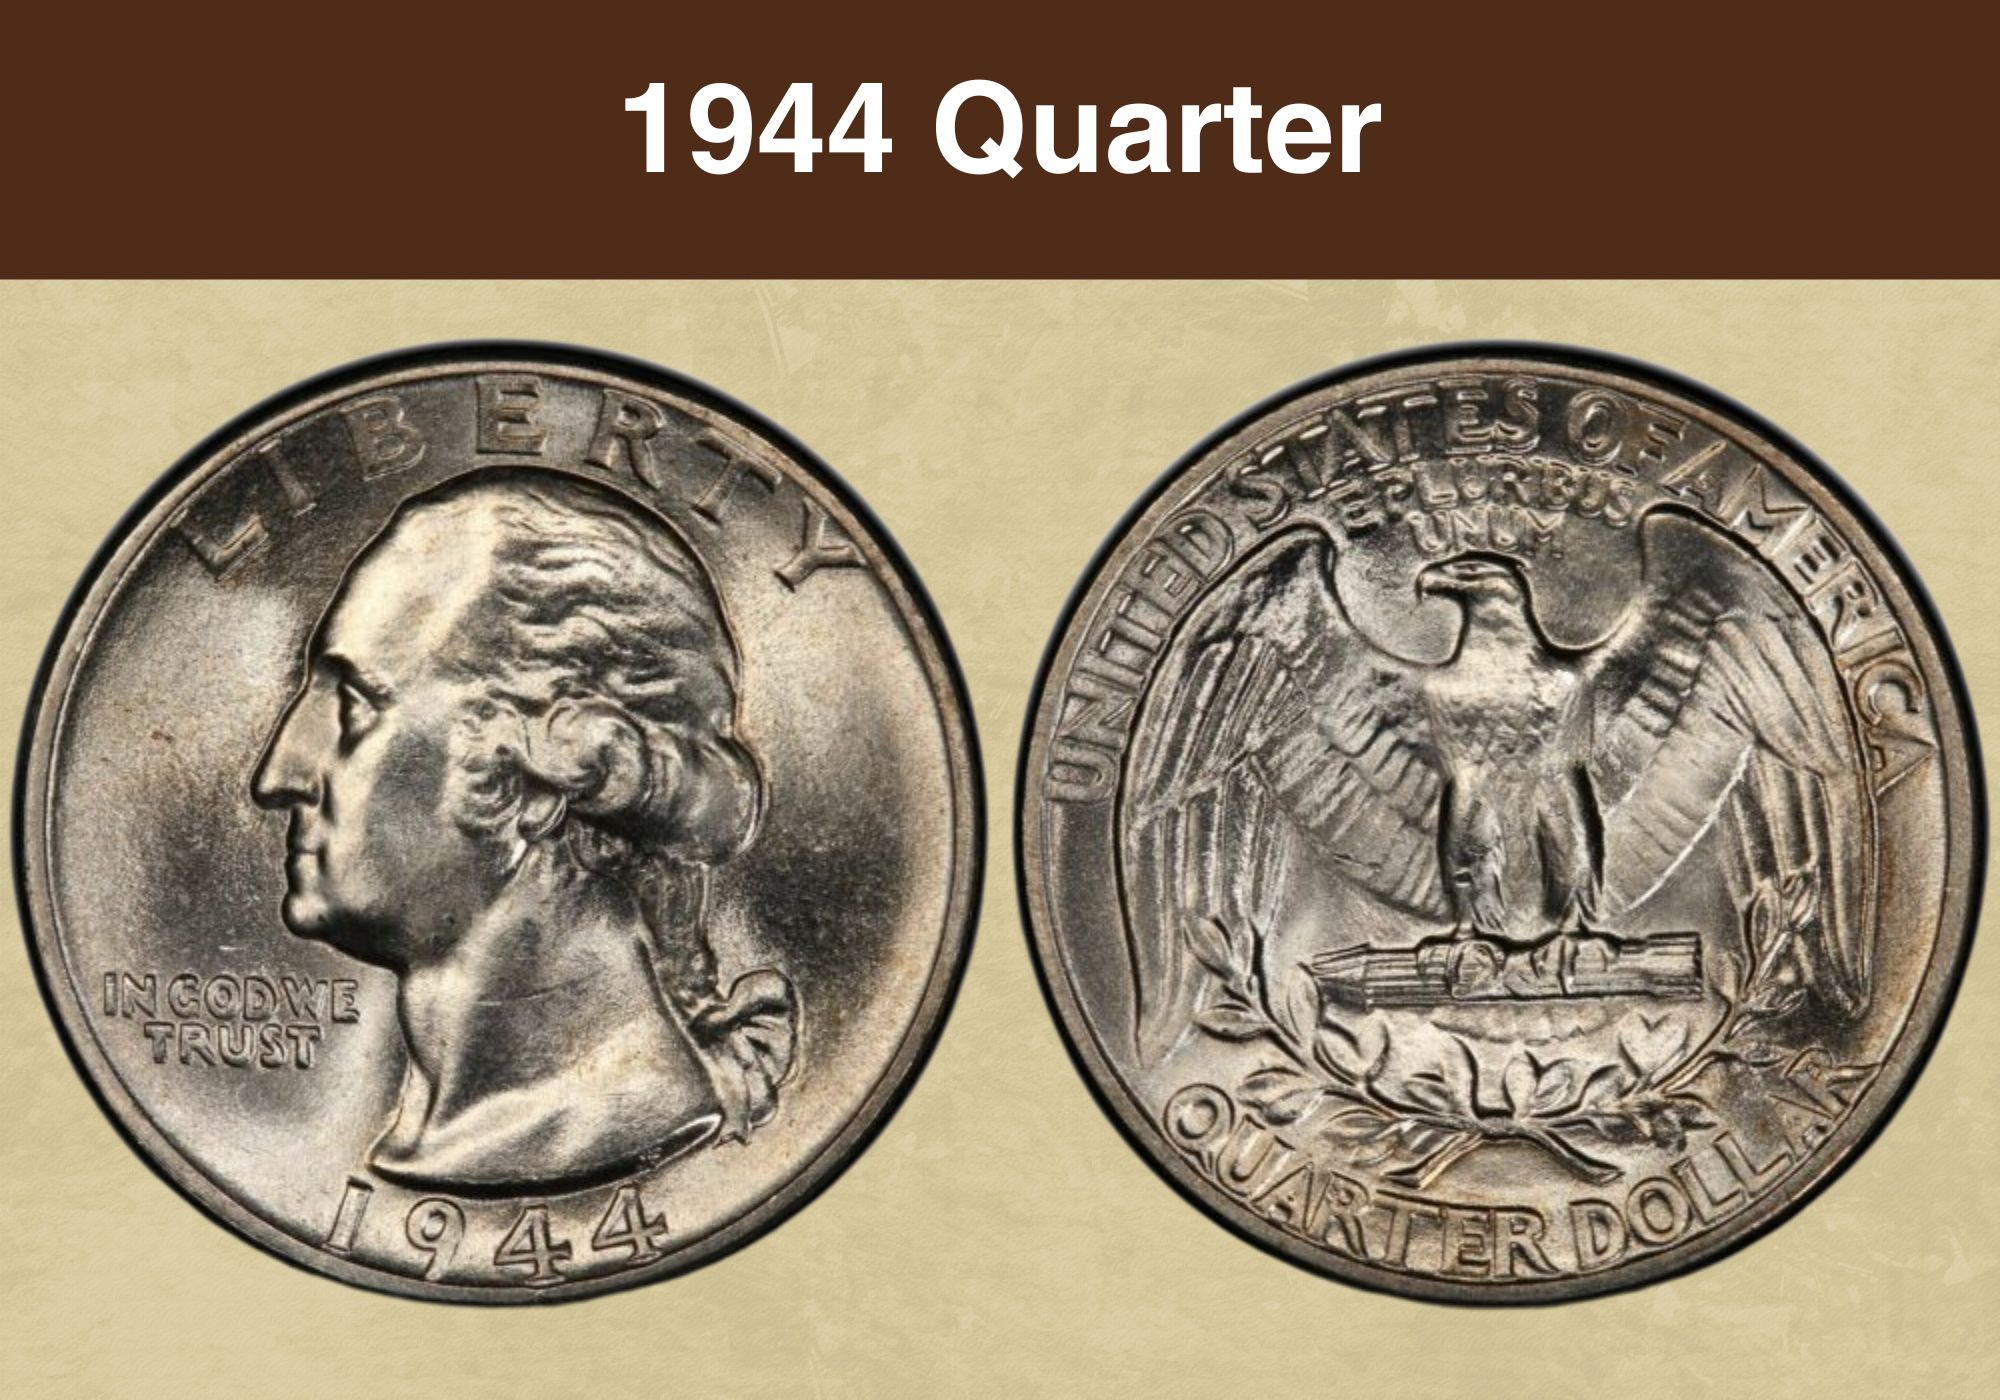 1994 Quarter Value: are P, D, S mint mark worth money?